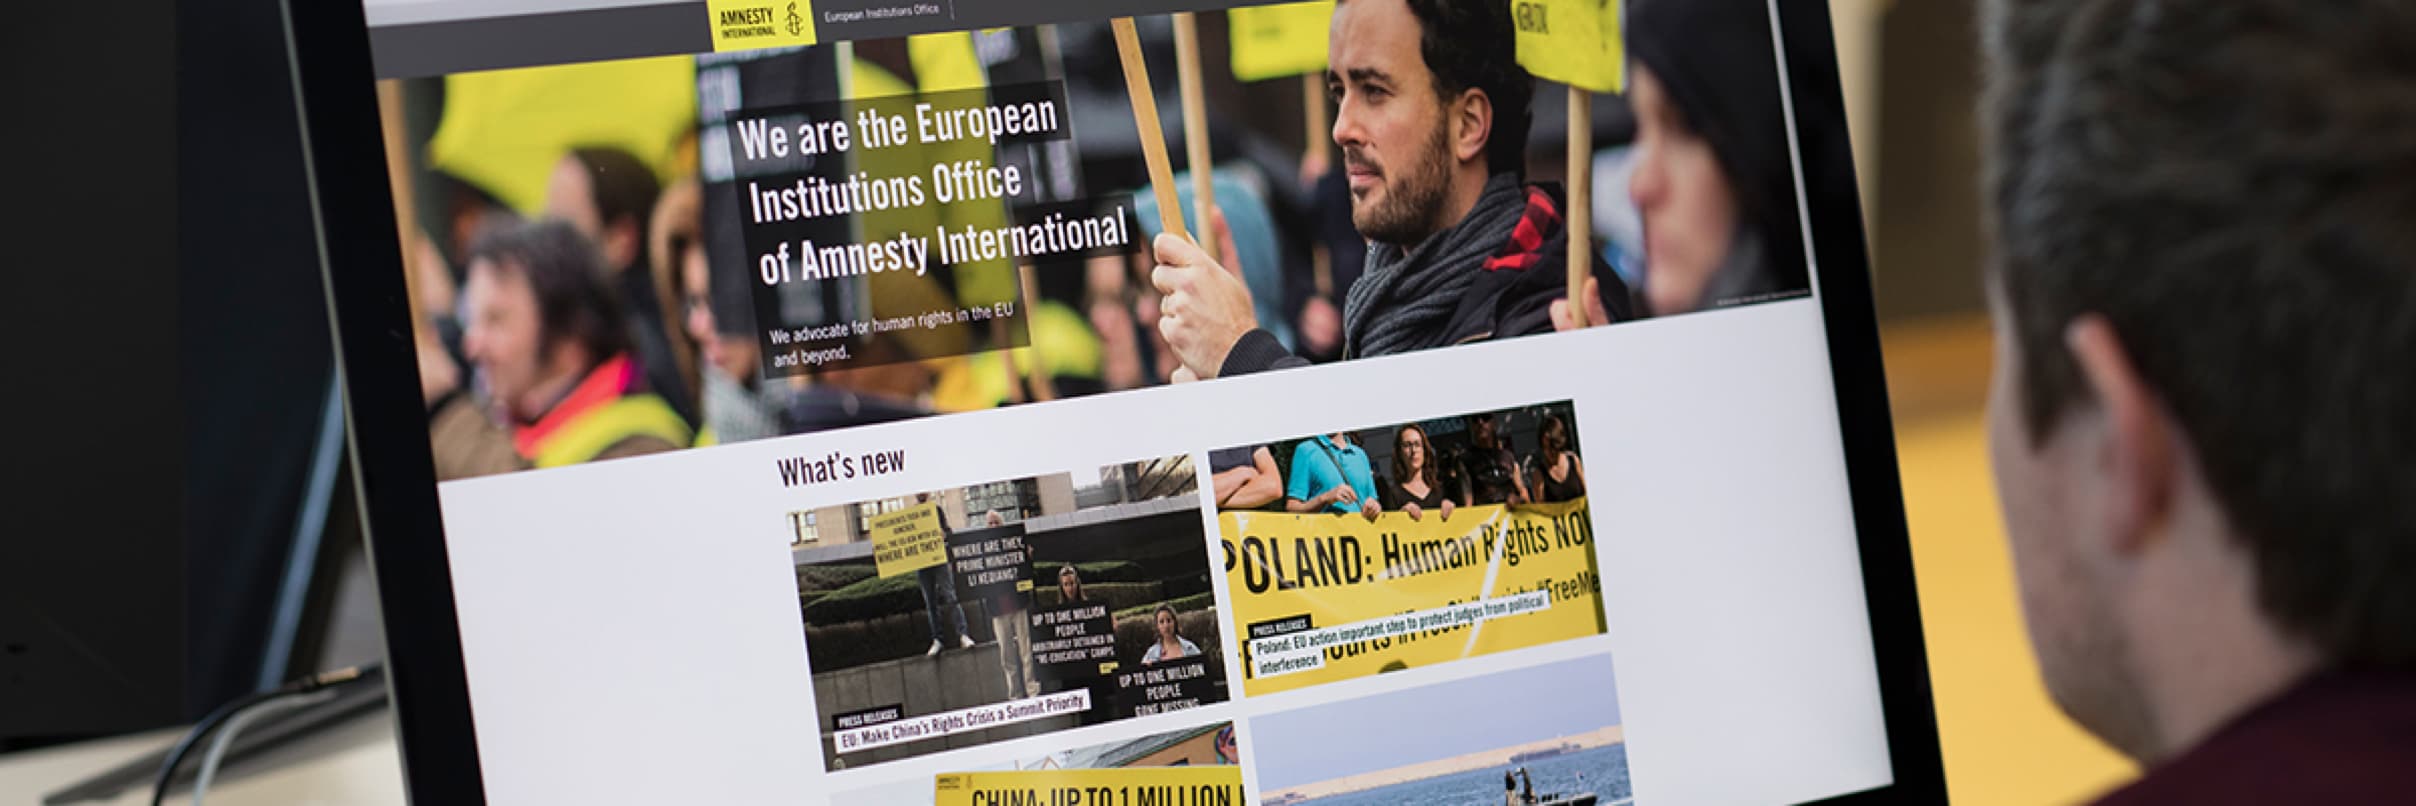 Amnesty International homepage on iMac screen